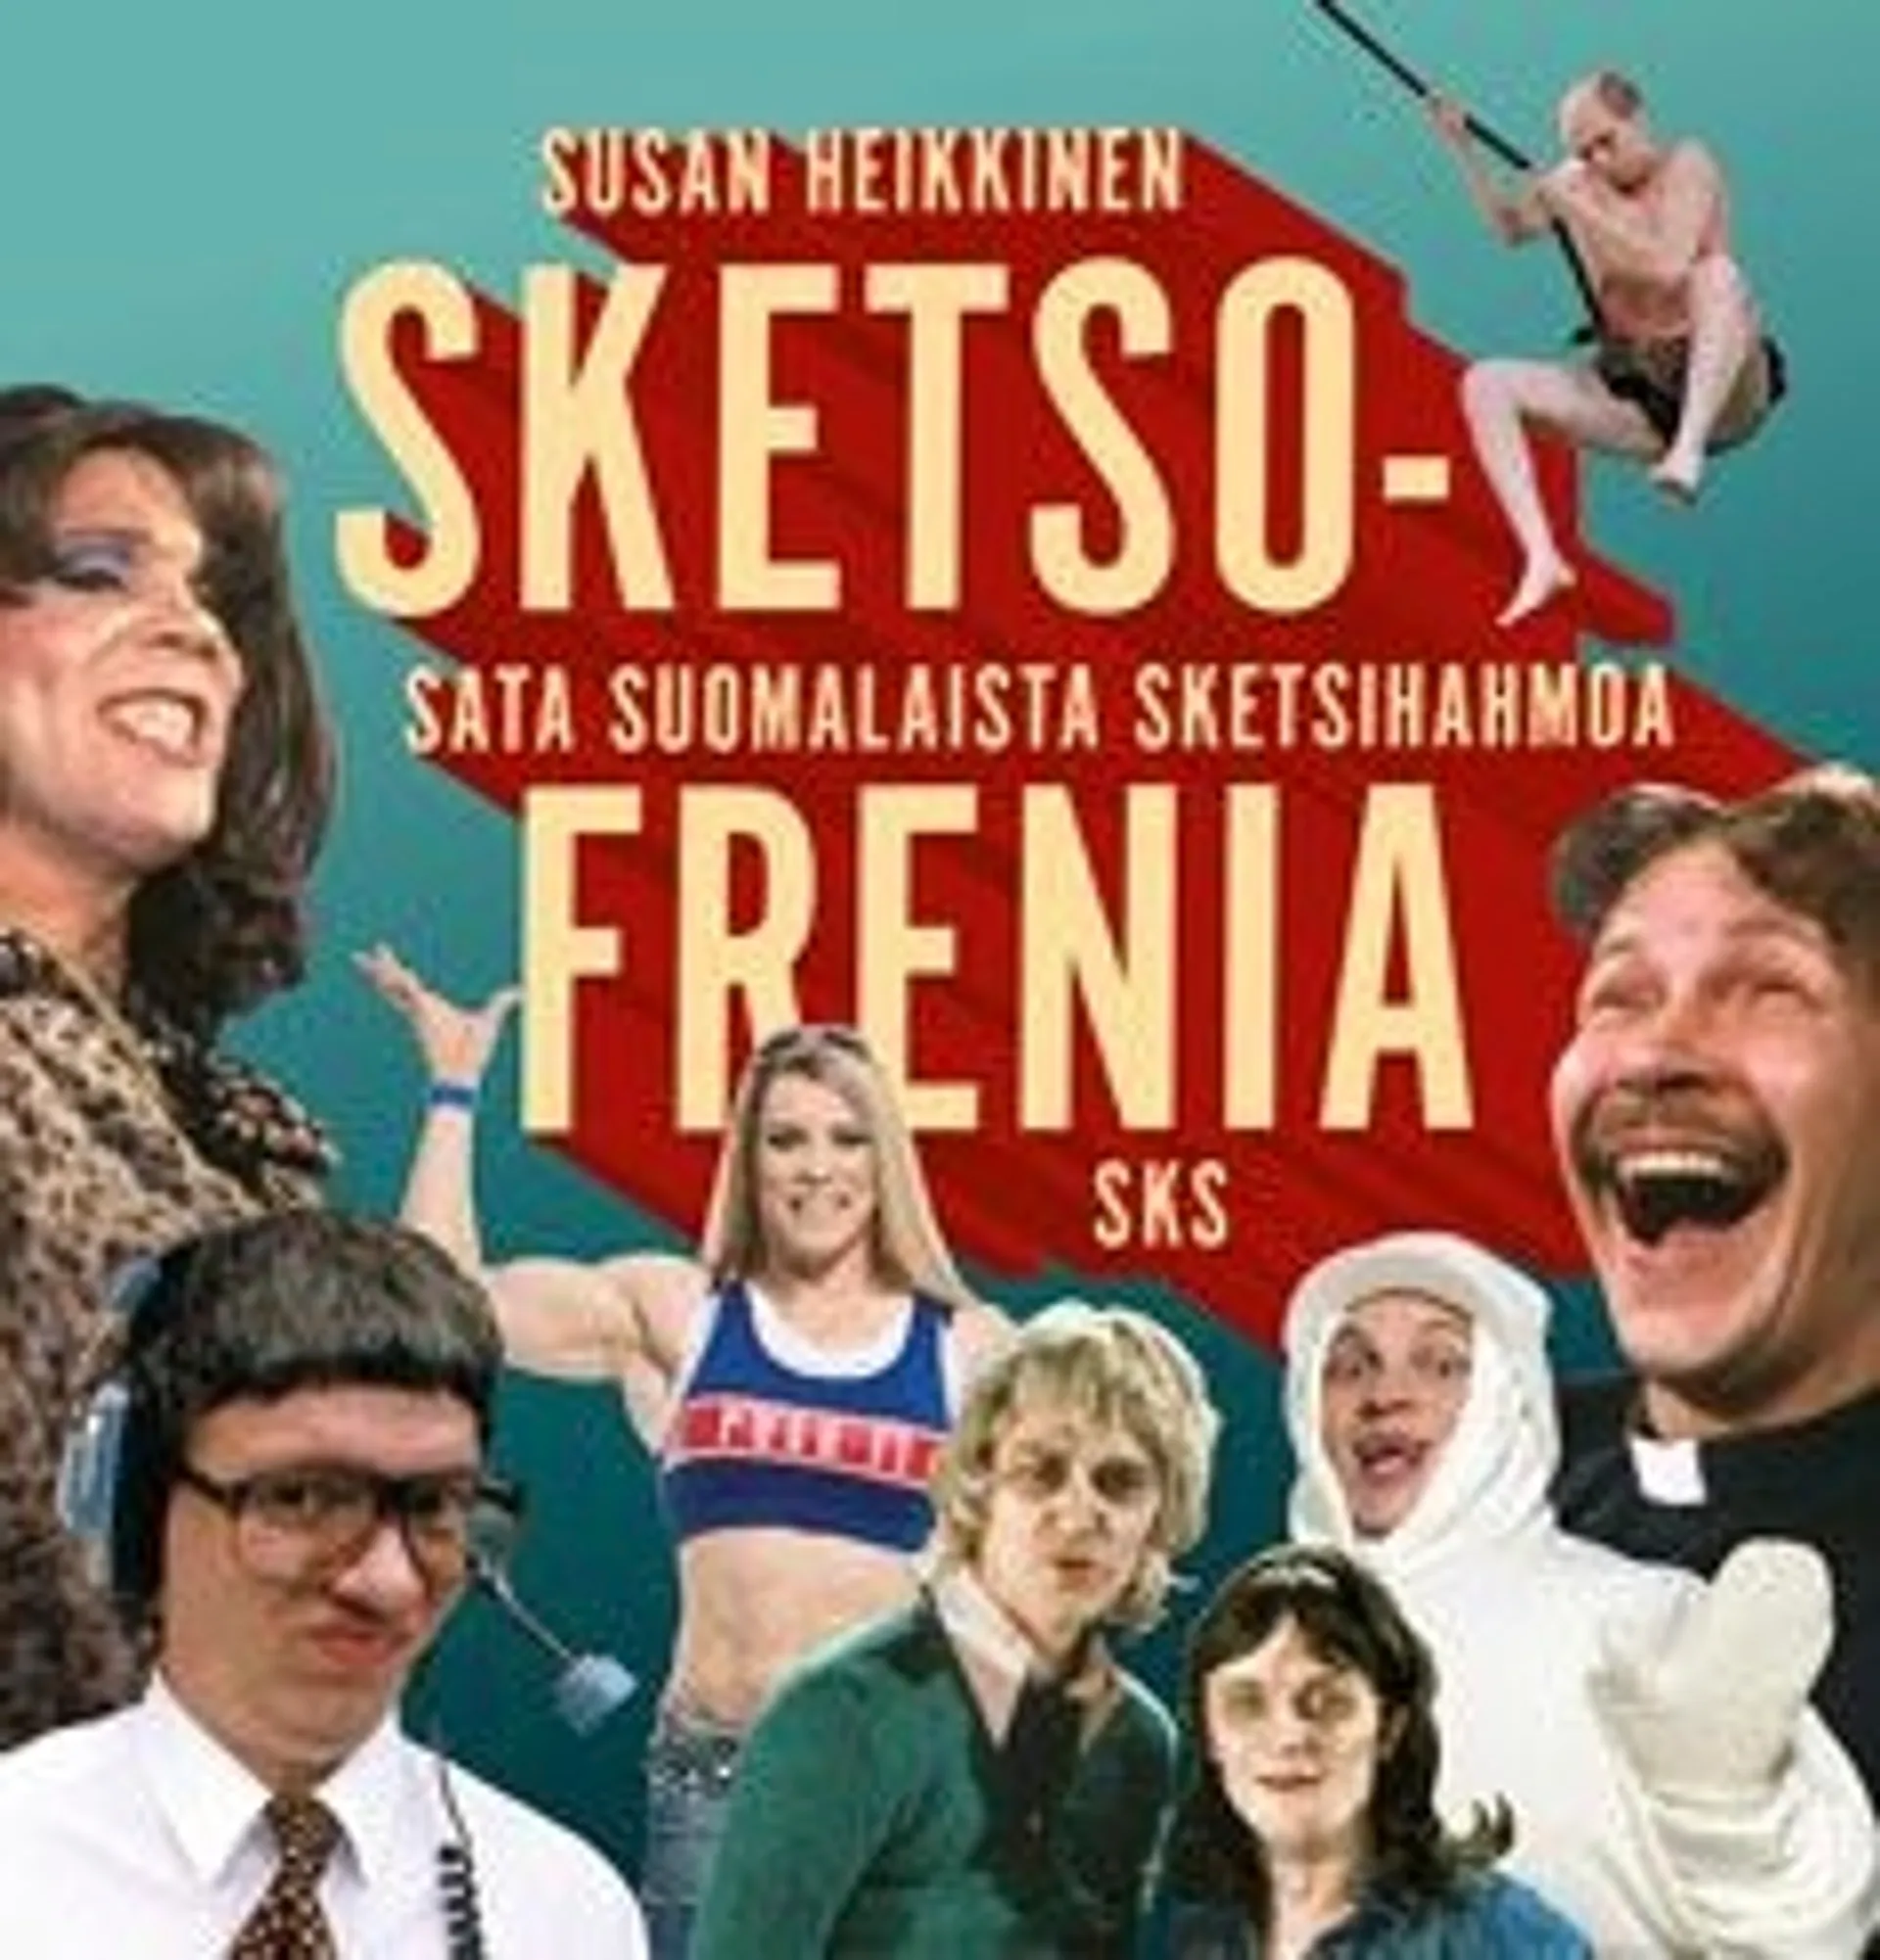 Heikkinen, Sketsofrenia